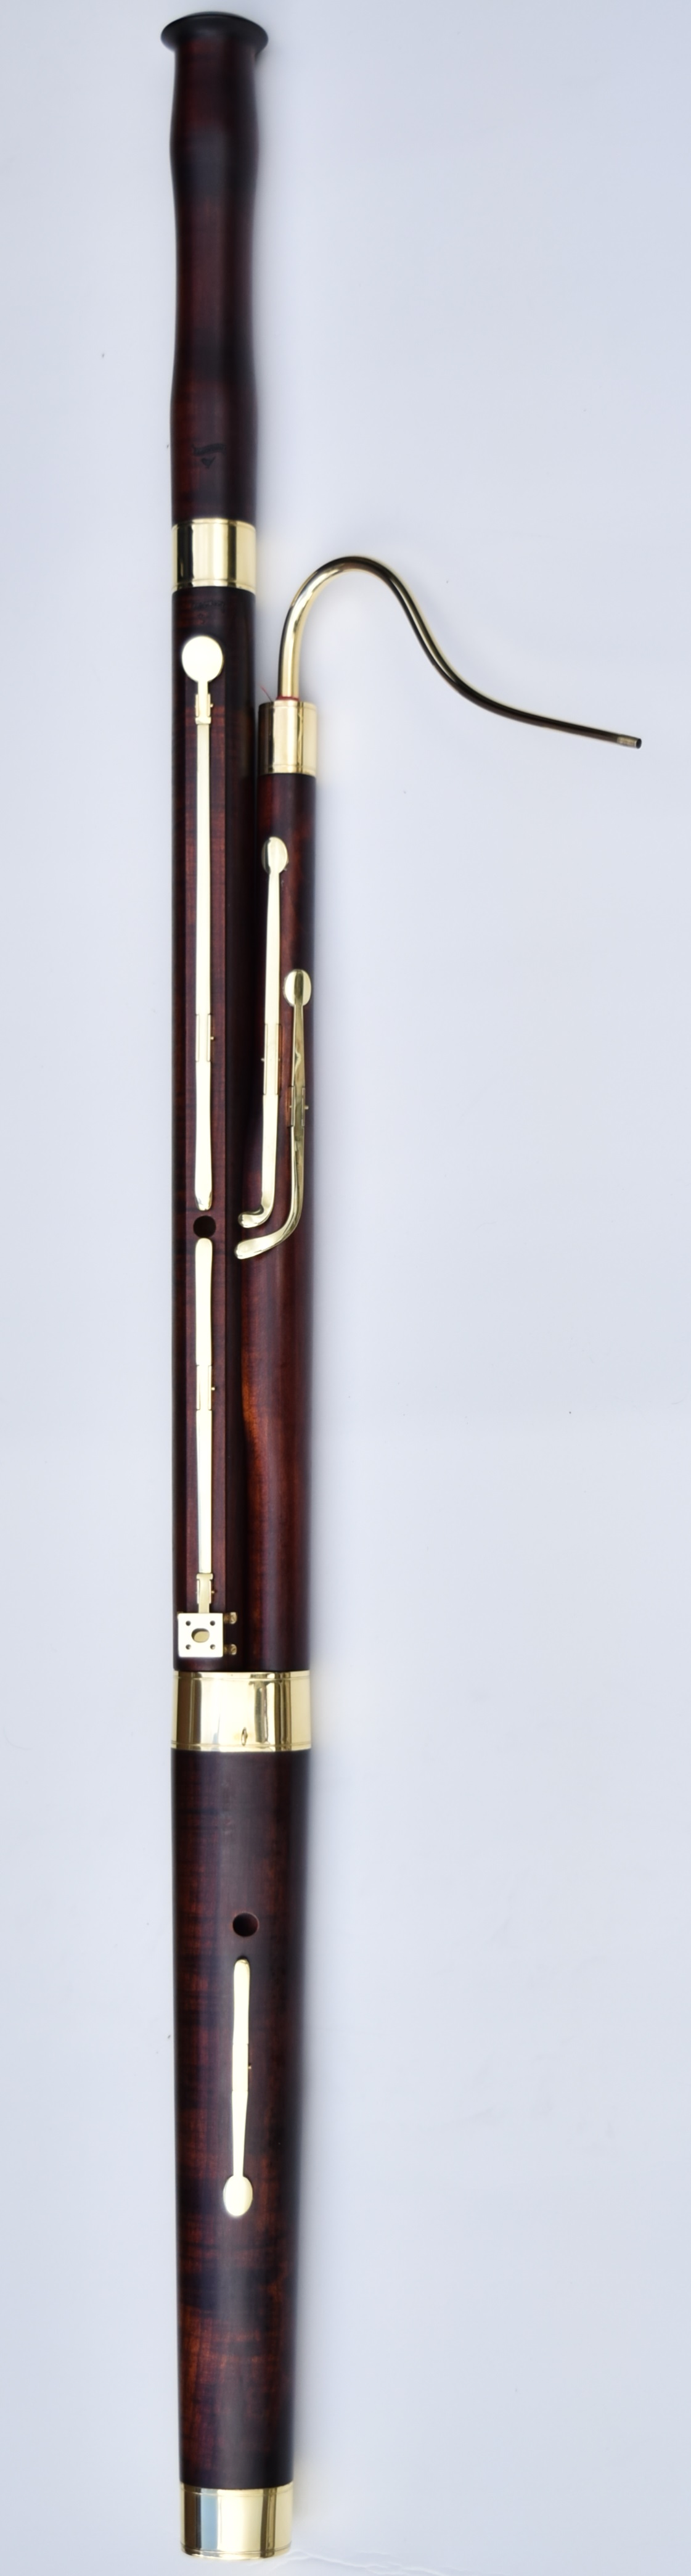 Classical Bassoon after J.H. Grenser